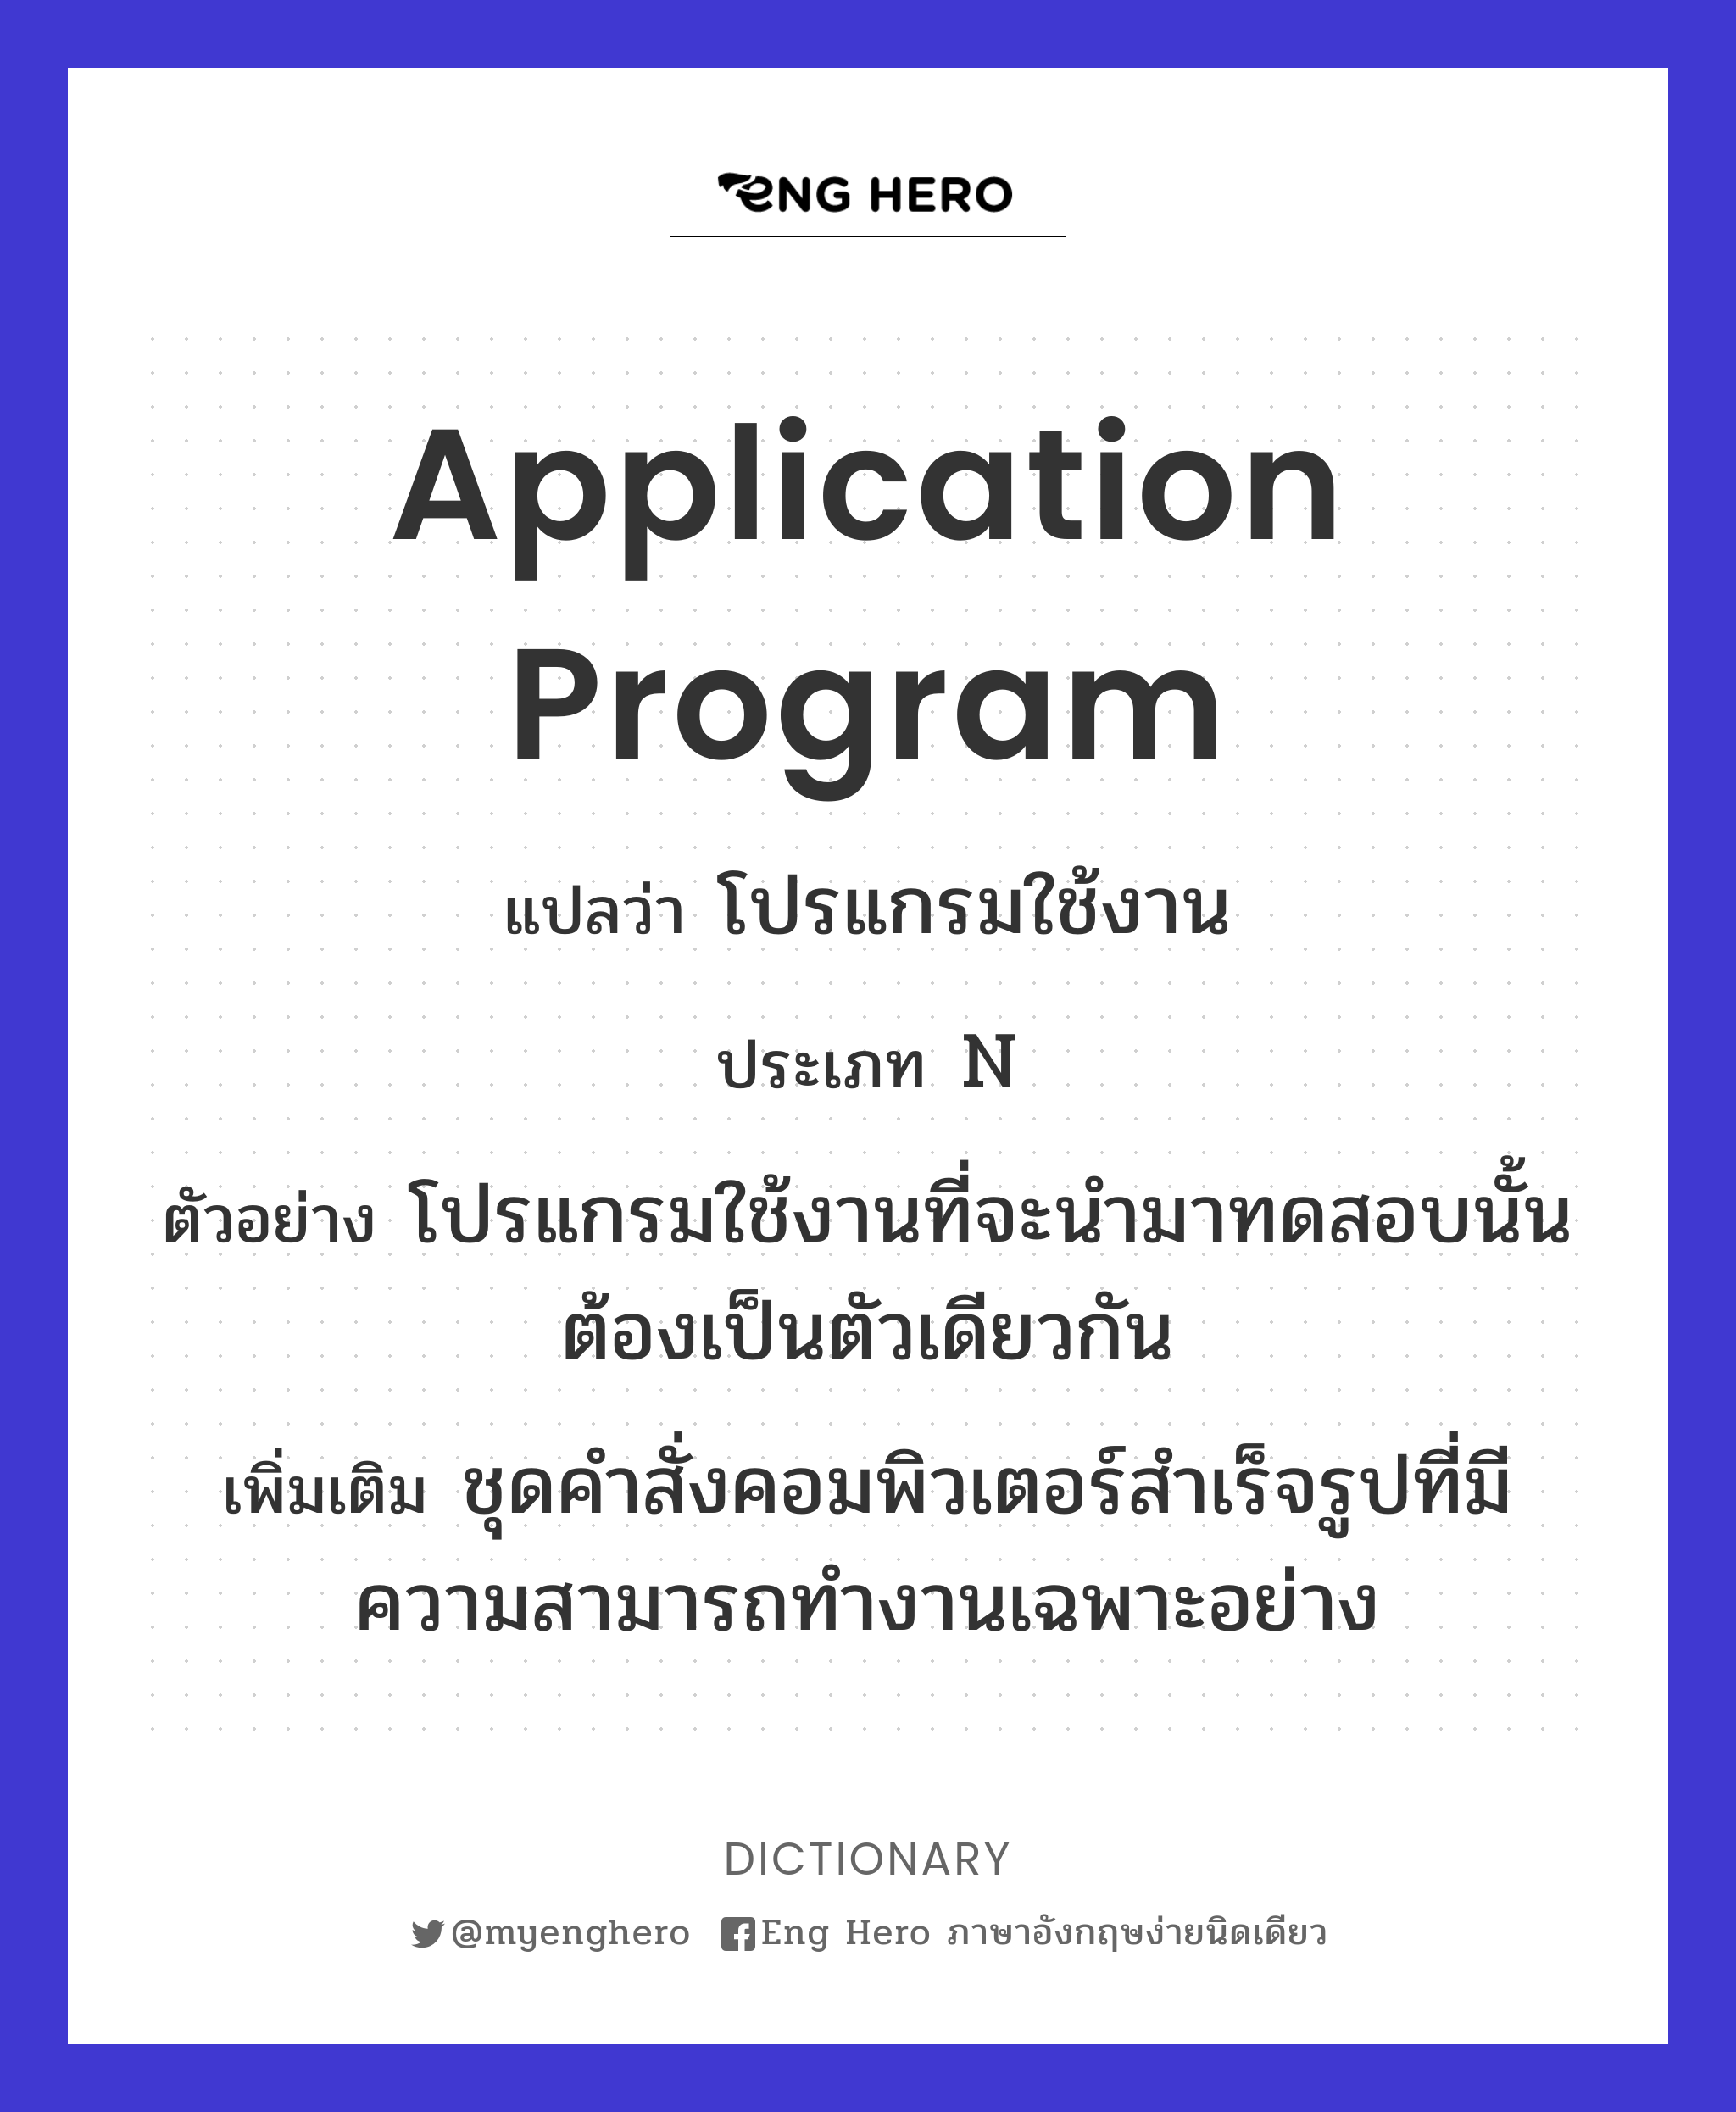 application program